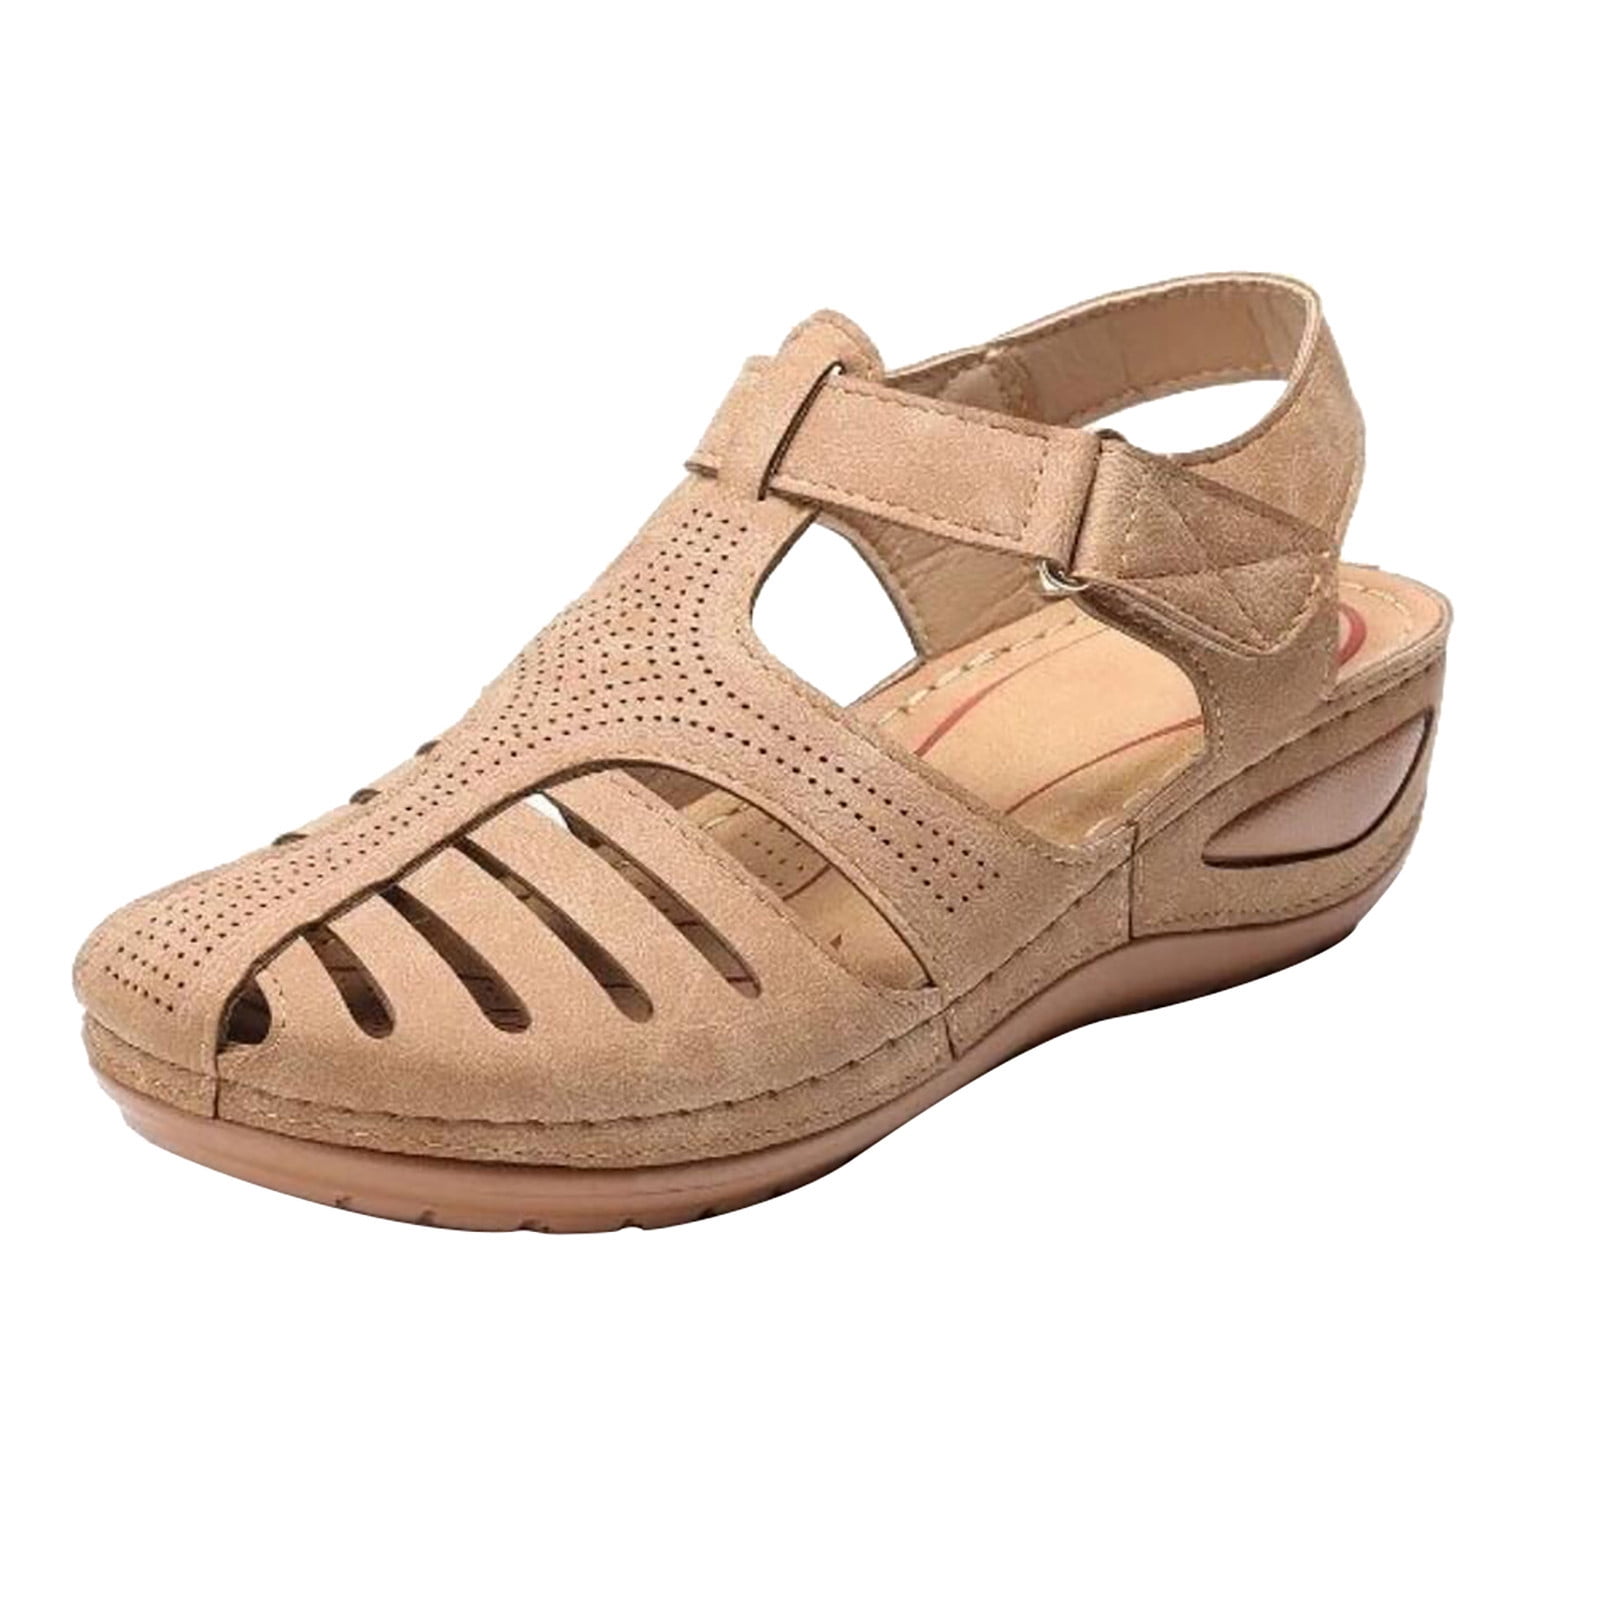 Sandals for Women Summer Vintage Soft Leather Closed Toe Anti-slip Sandals Sandals for Women 